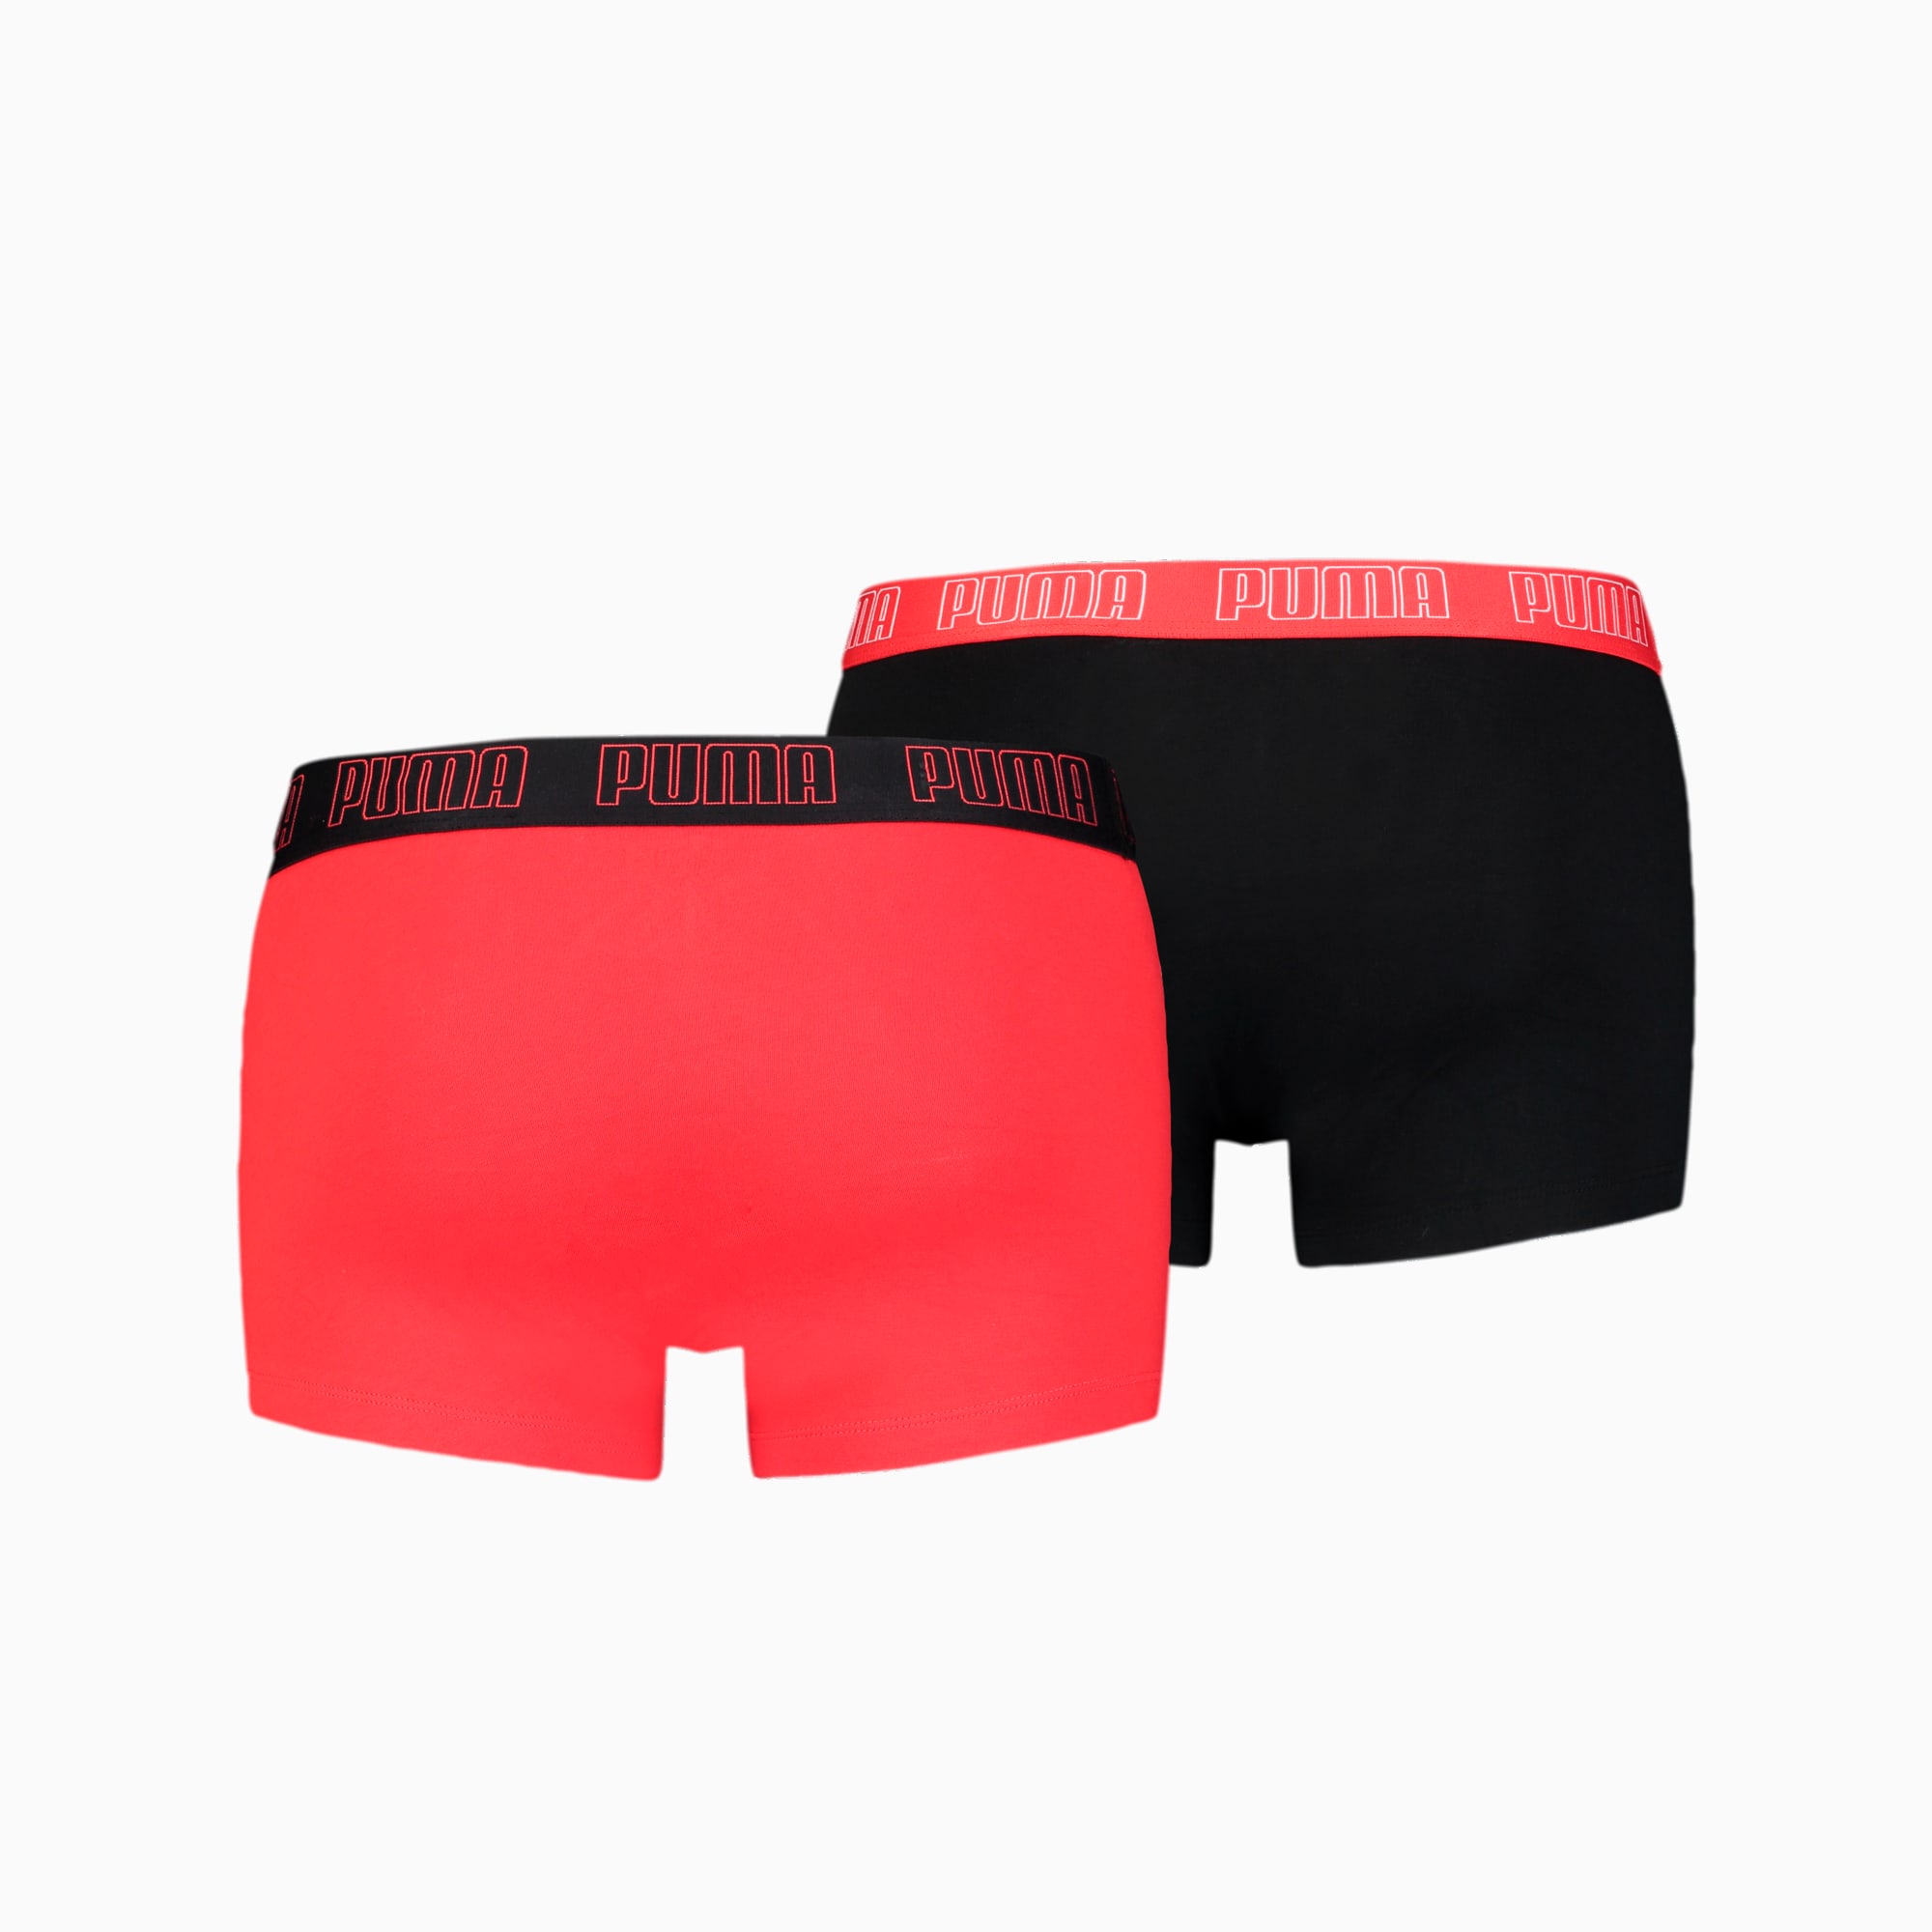 PUMA Basic Men's Trunks 2 Pack, Red/Black, Size M, Clothing